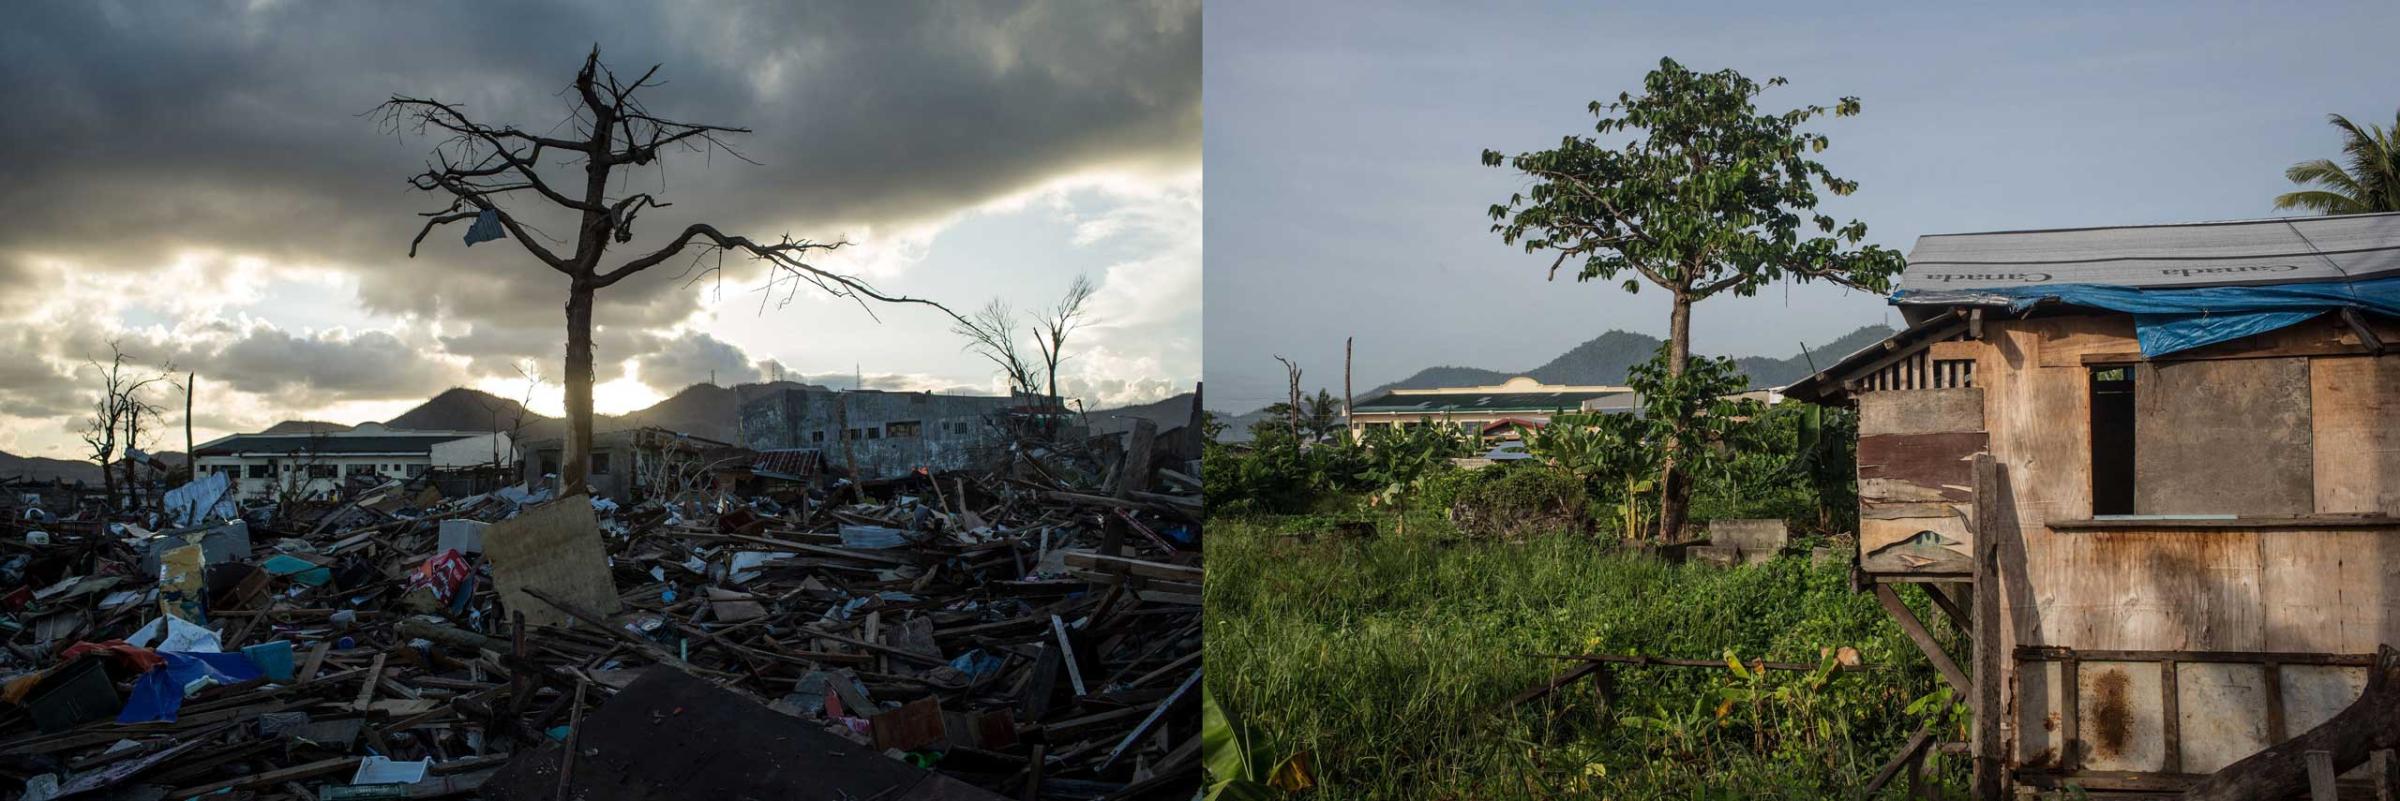 Views Of Tacloban 1 Year After Typhoon Haiyan Devastation